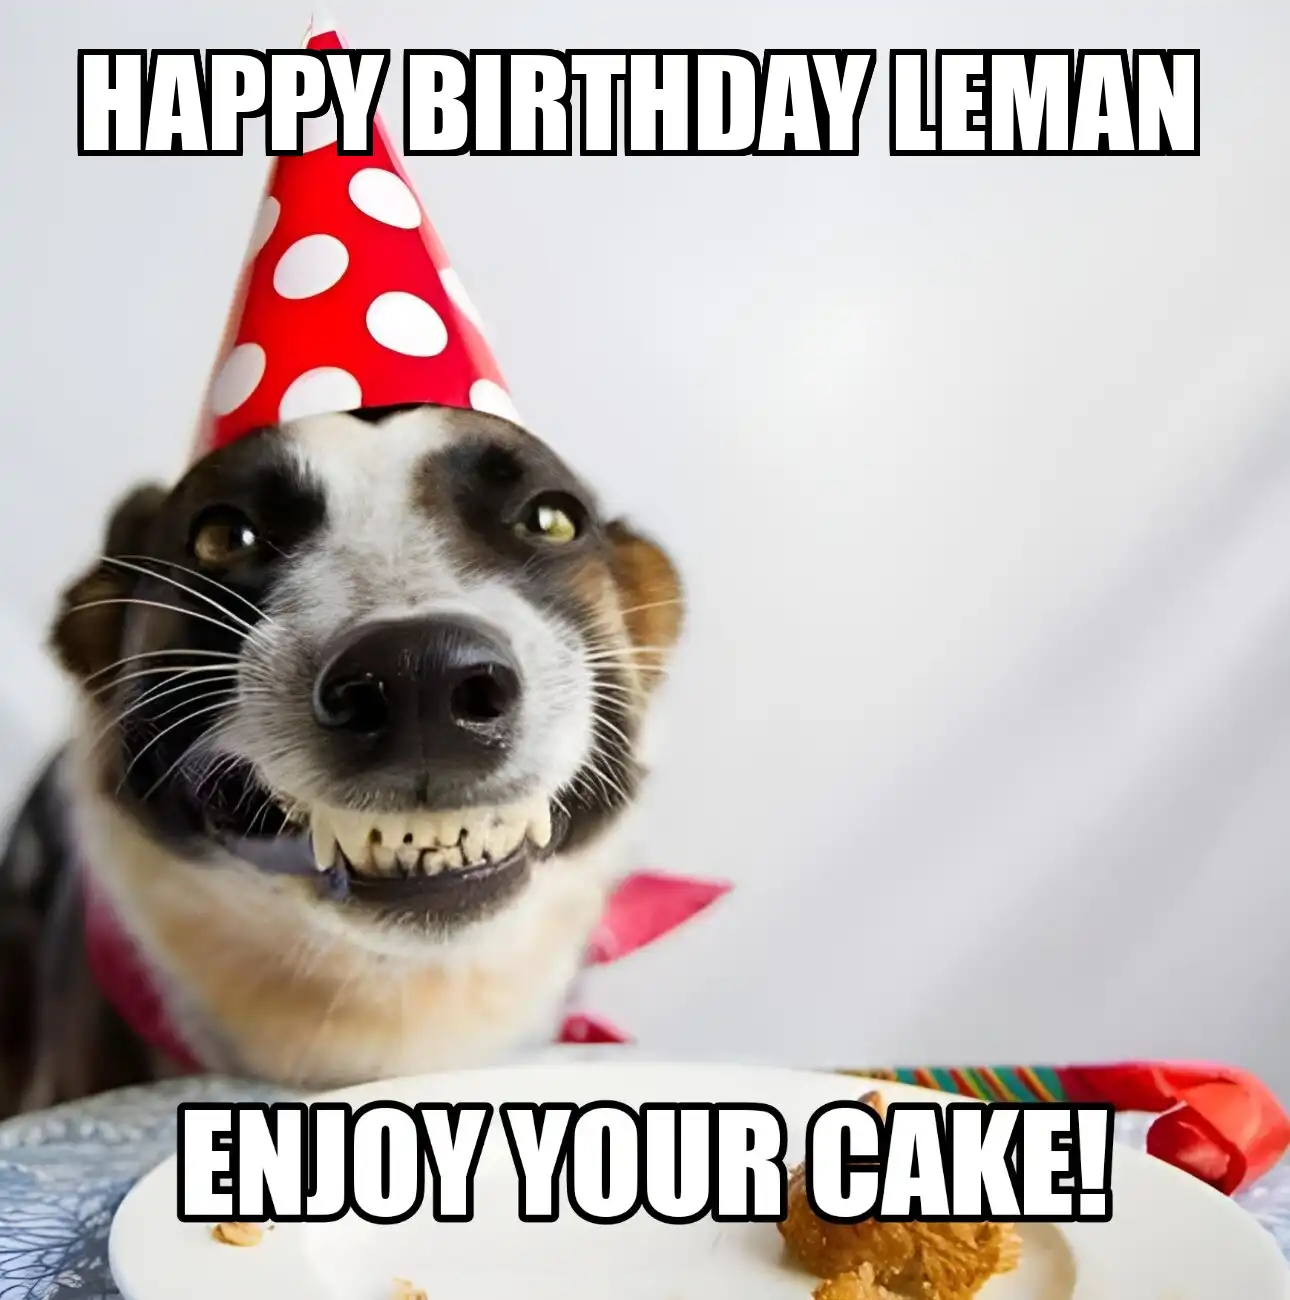 Happy Birthday Leman Enjoy Your Cake Dog Meme